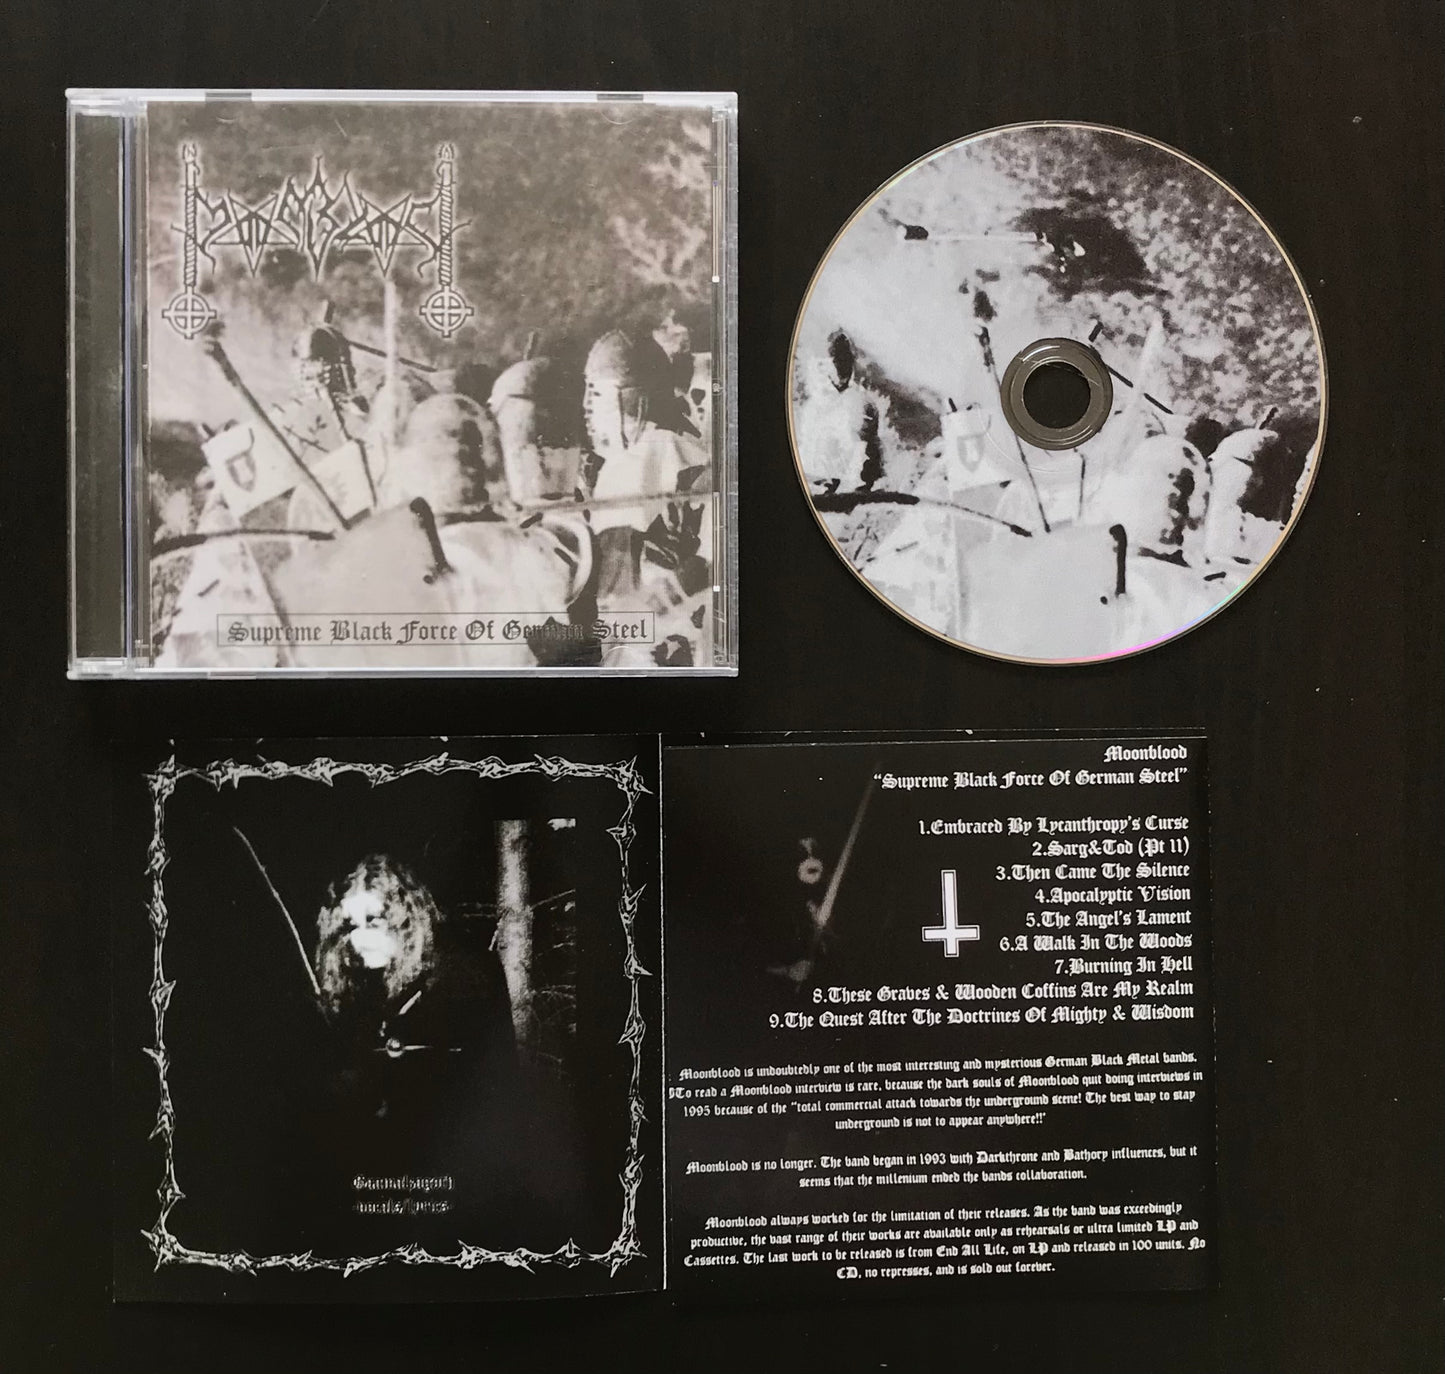 Moonblood (Ger) "Supreme Force of German Steel" - CDs